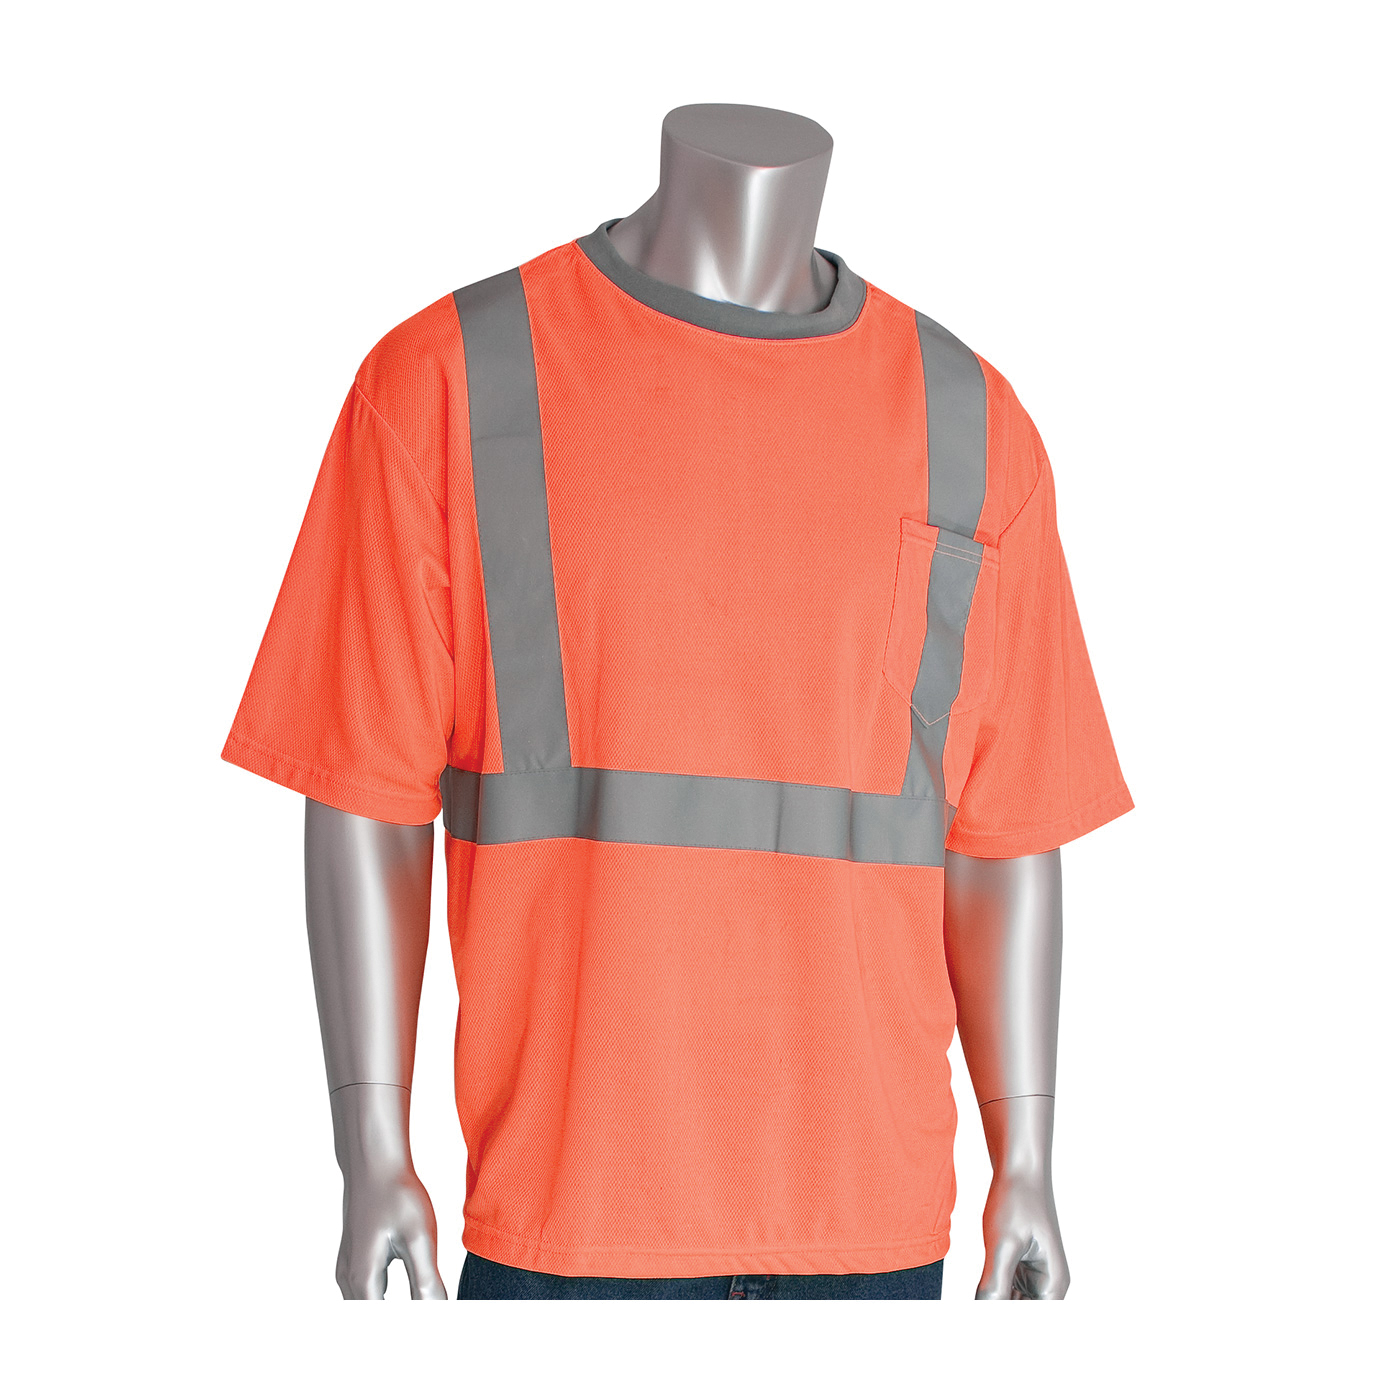 PIP® 312-1200-OR Short Sleeve Crew Neck T-Shirt With Reflective, Hi-Viz Orange, Bird's Eye Polyester